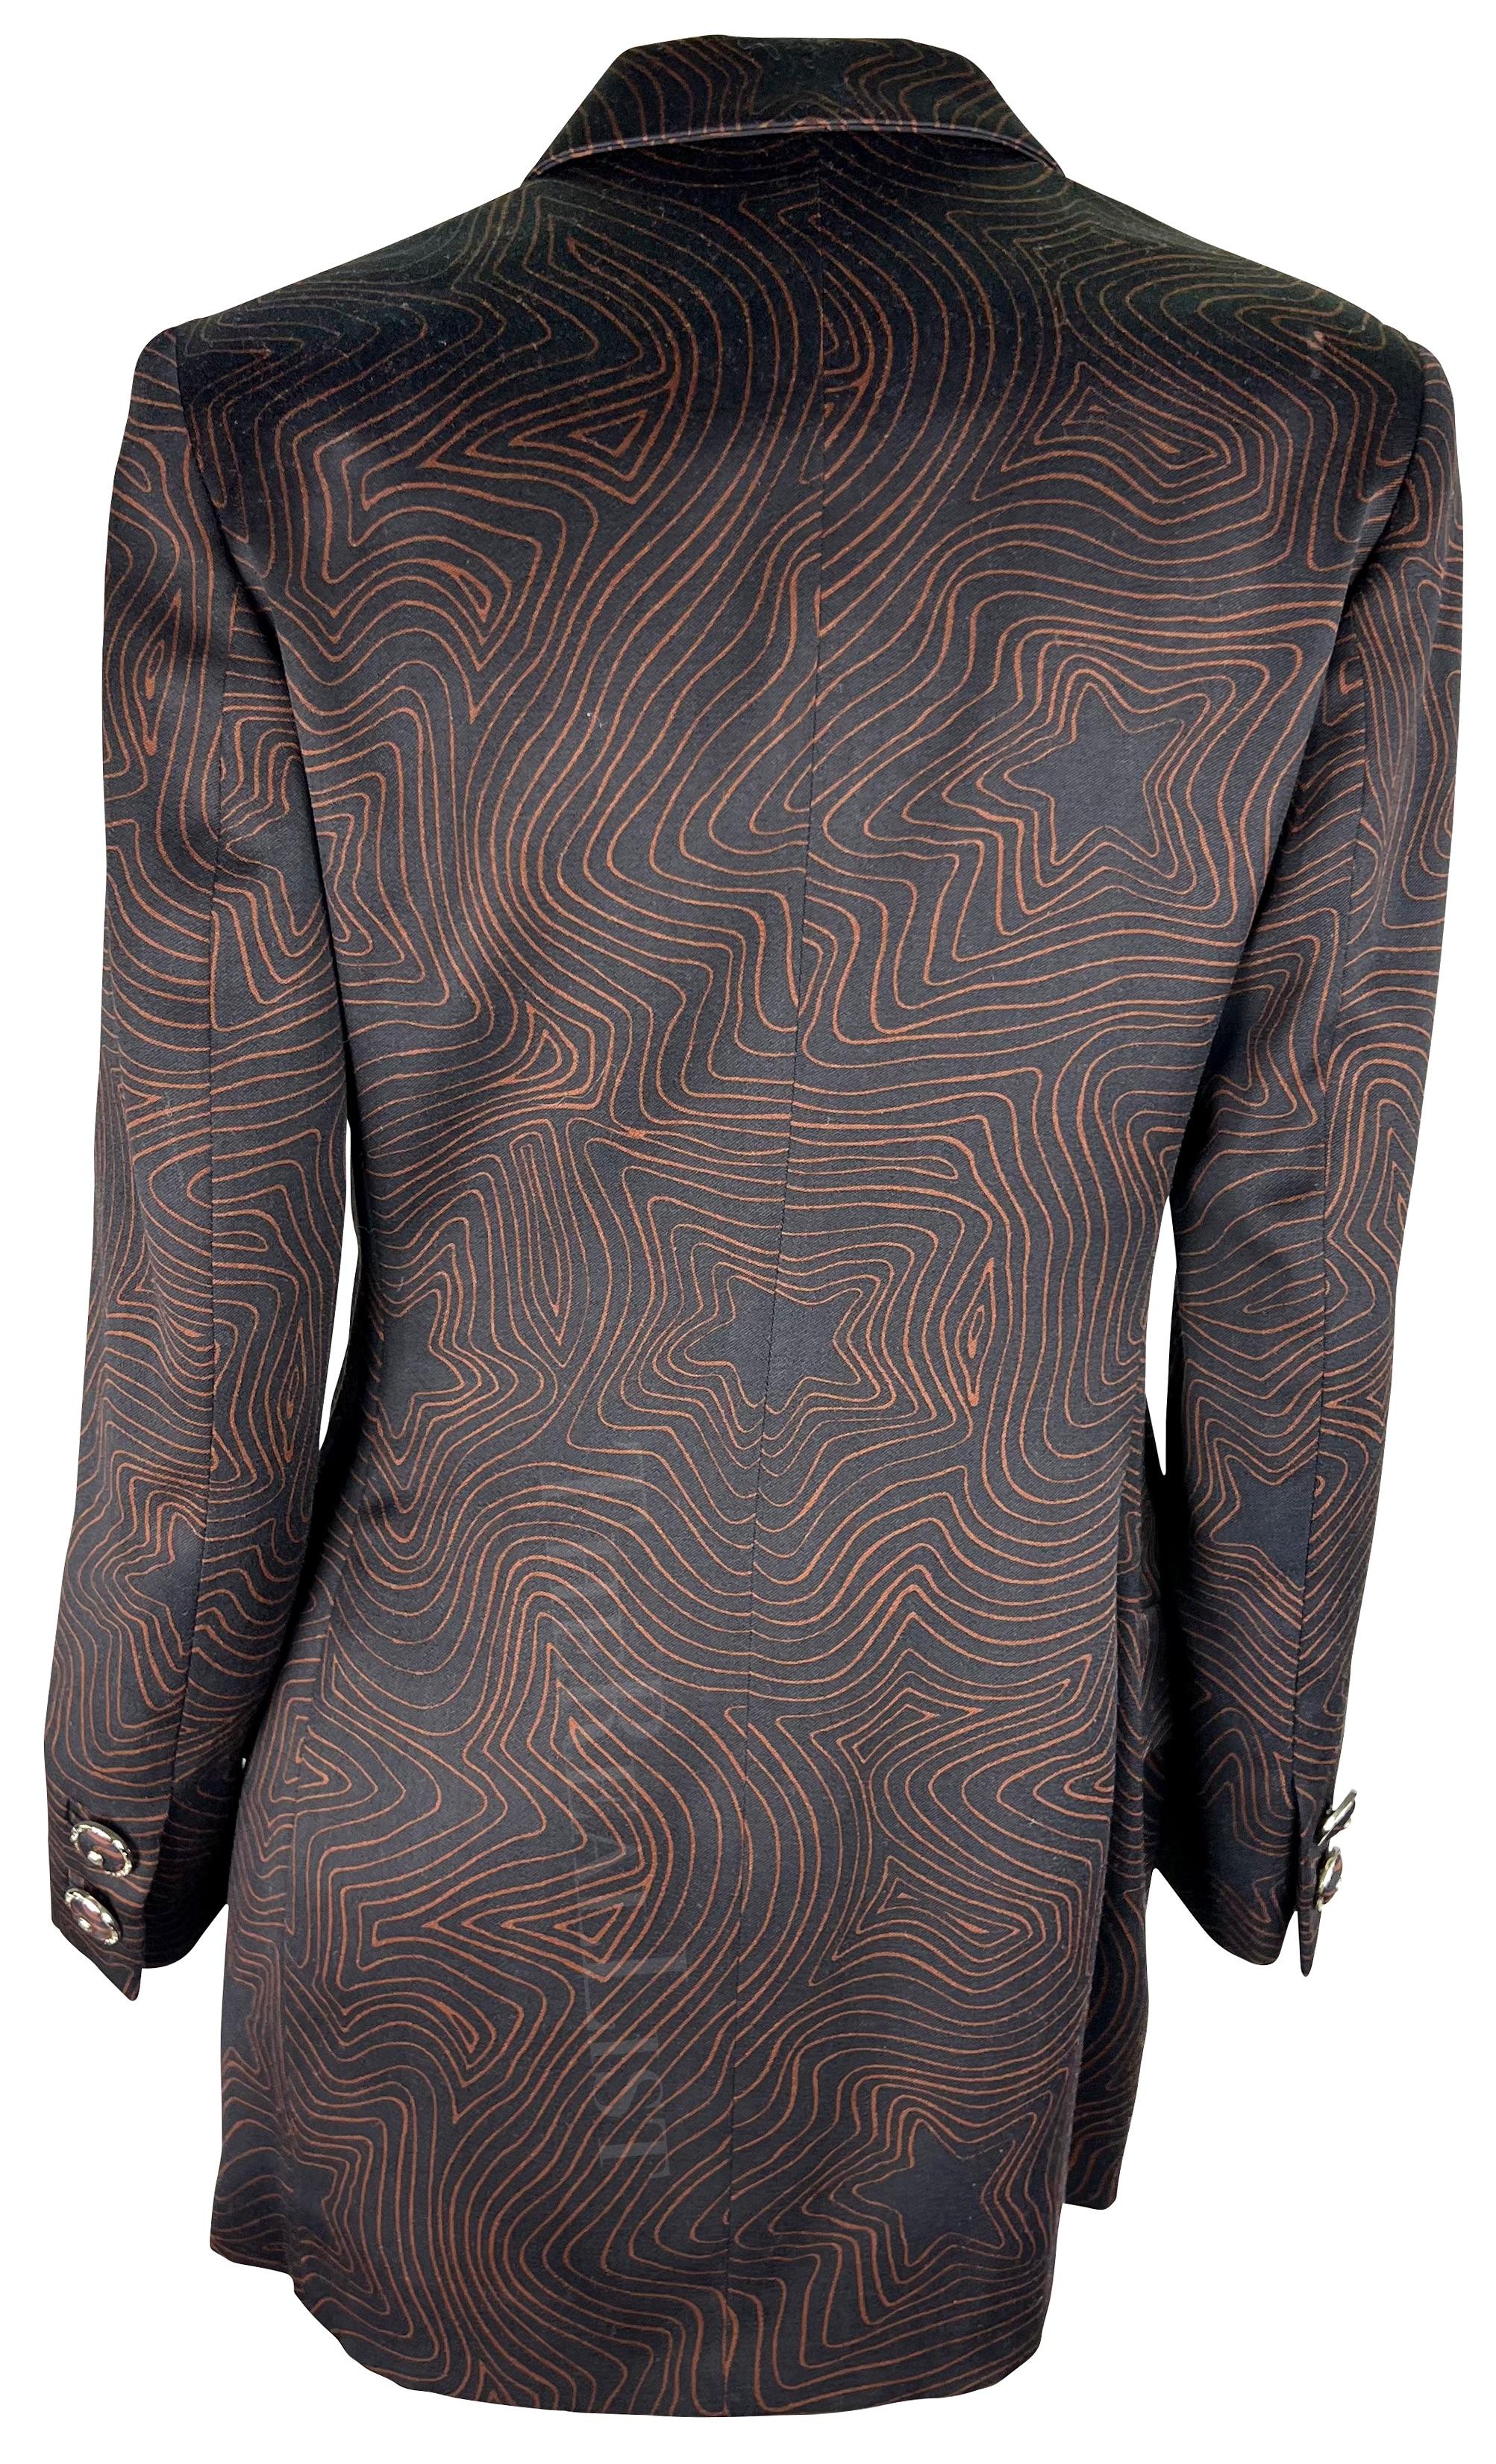 S/S 1996 Gianni Versace Black Brown Abstract Star Print Medusa Blazer For Sale 1